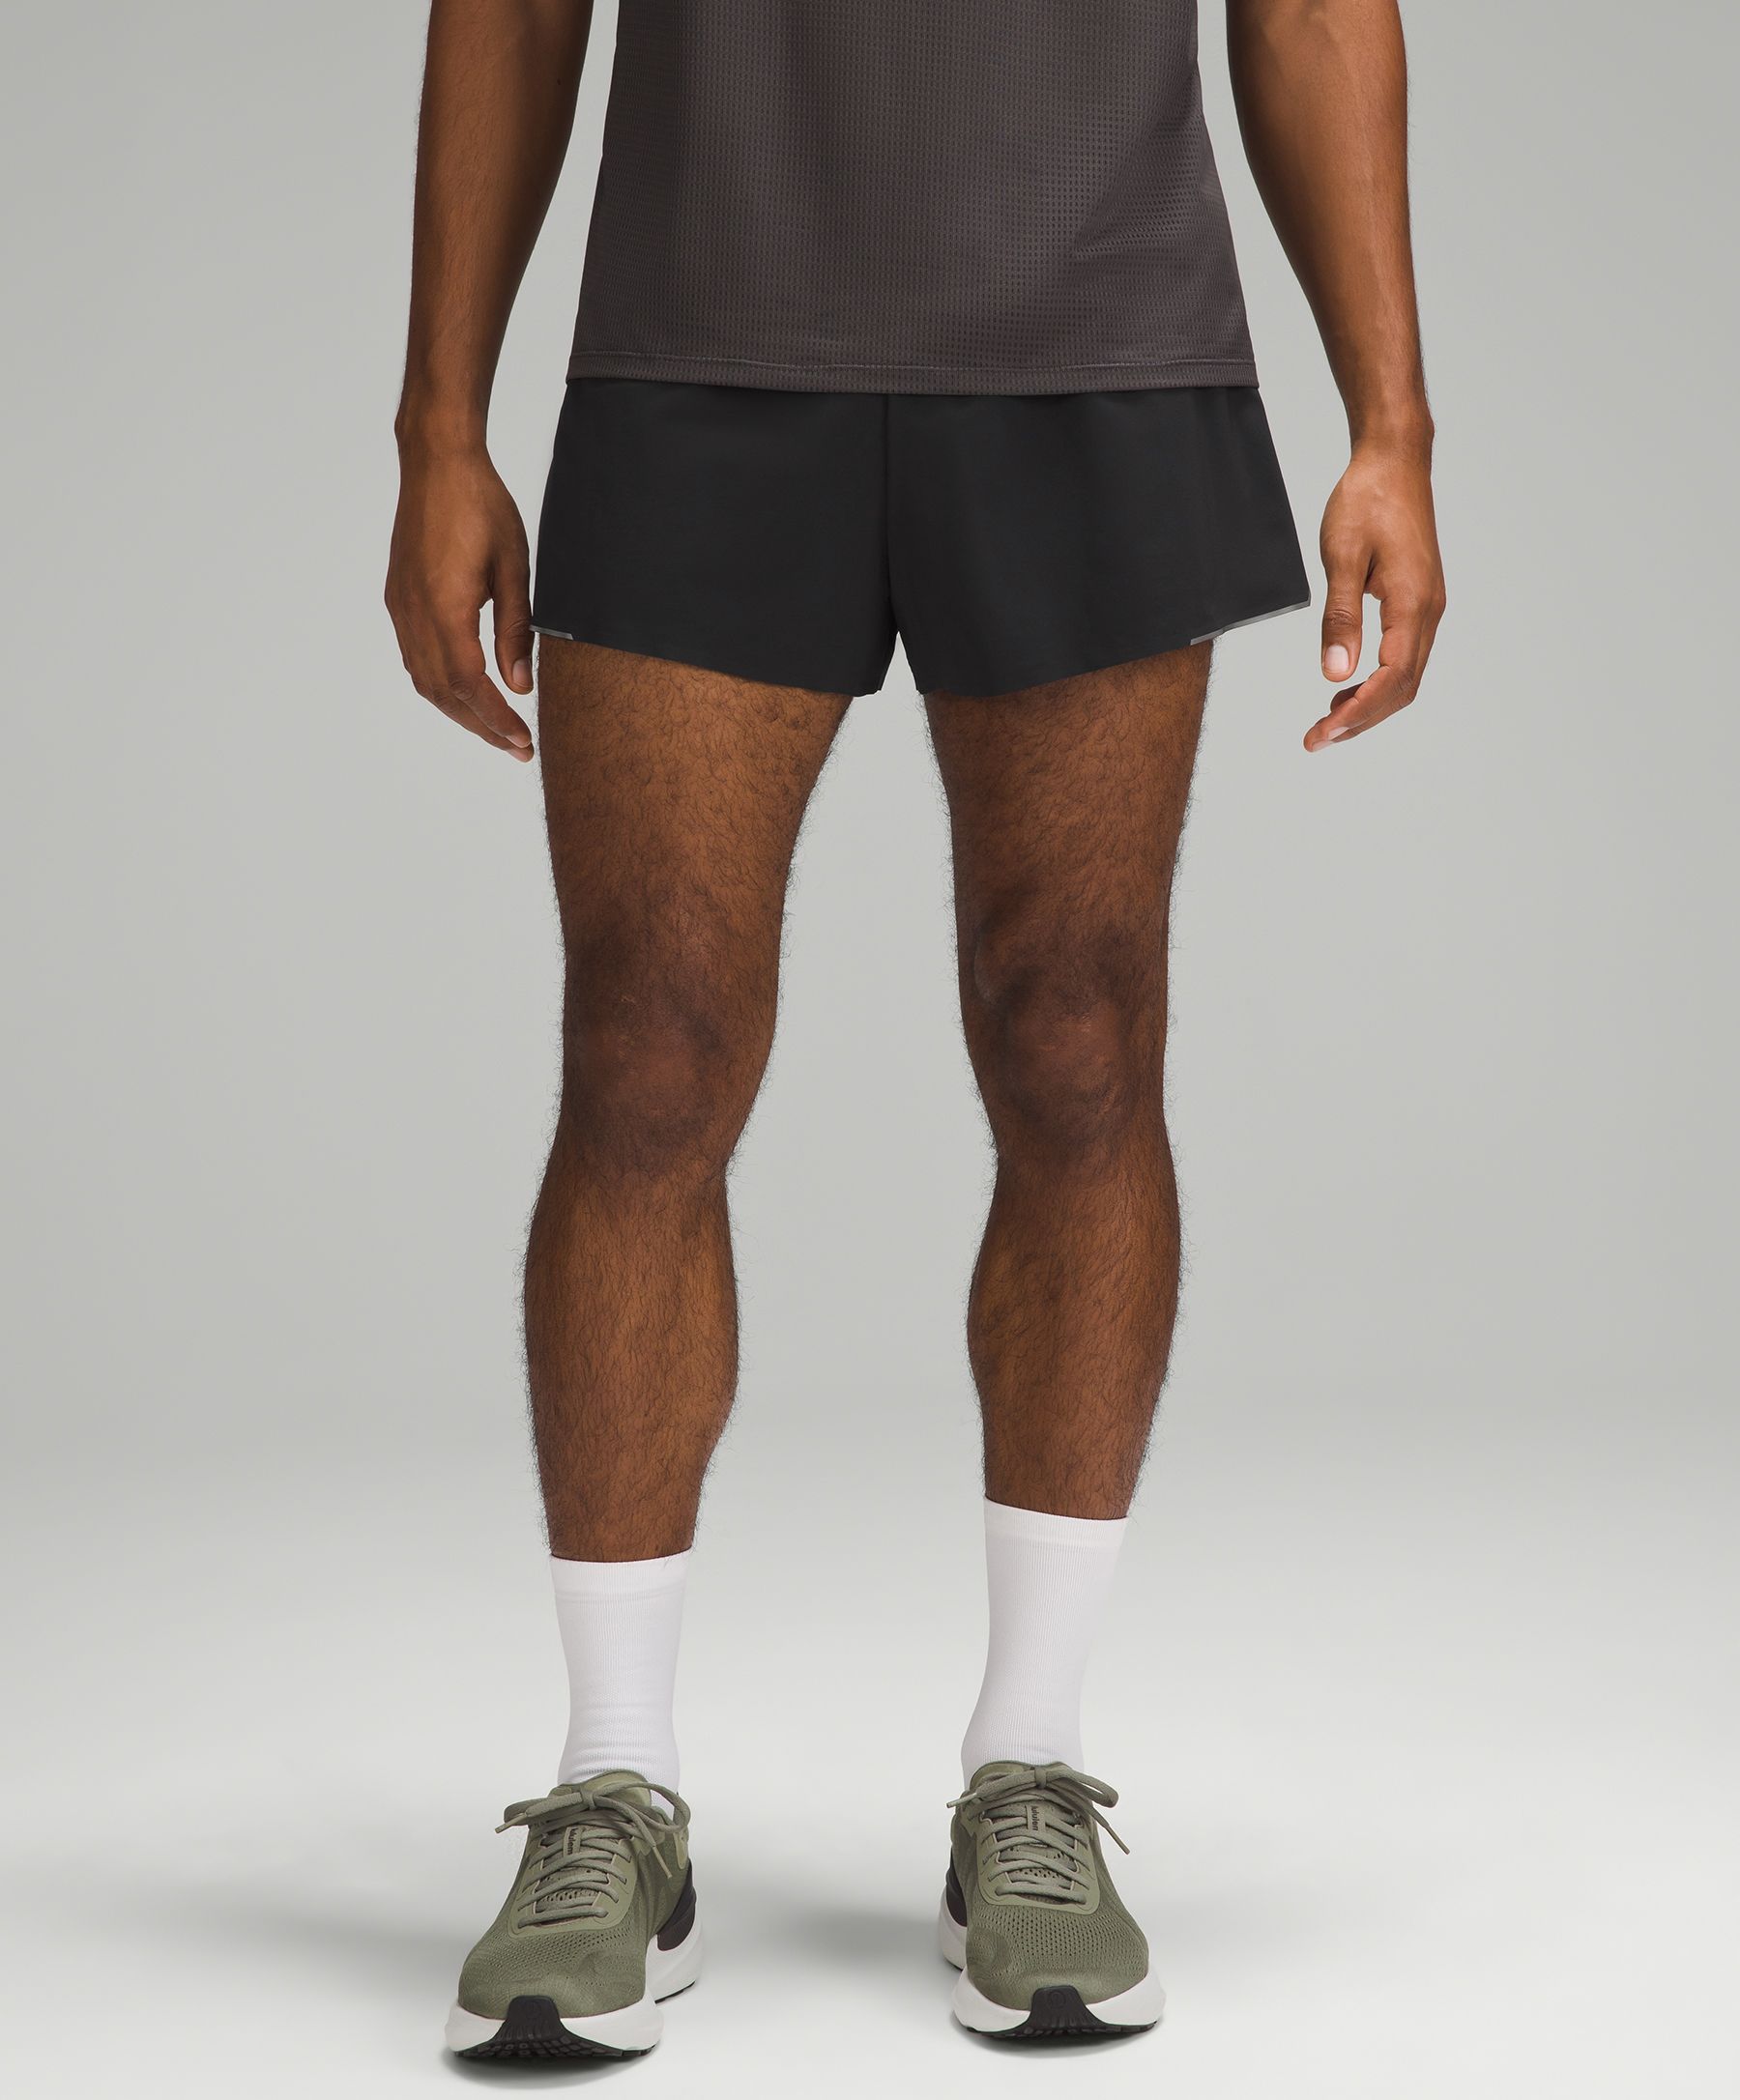 Fast and Free Split Short 3" | Men's Shorts